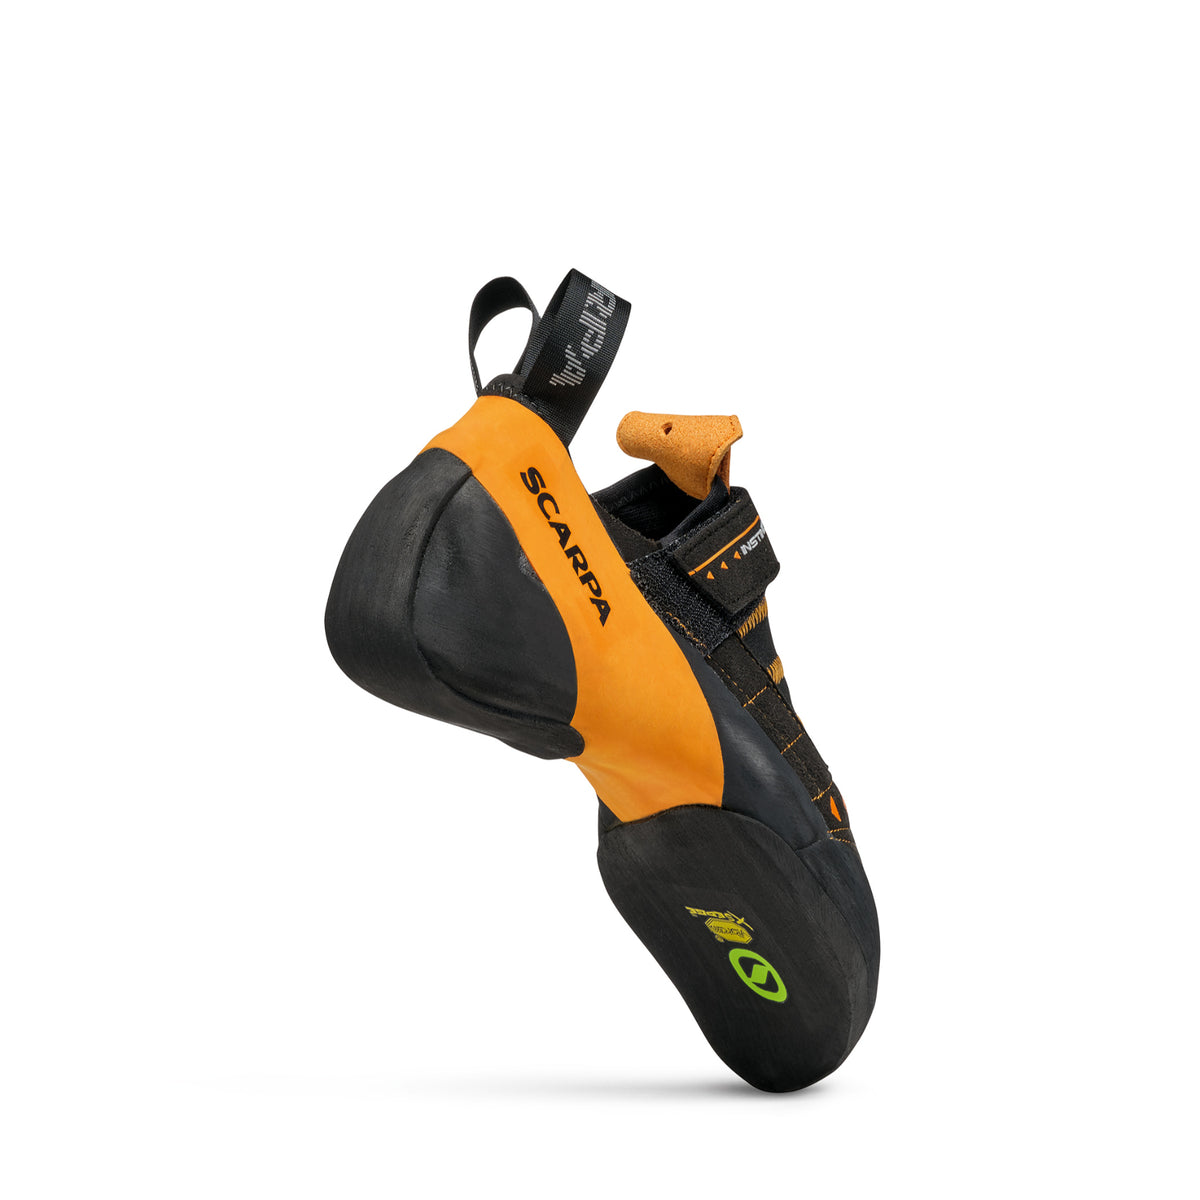 Scarpa Instinct VS climbing shoe in black/orange. rear view